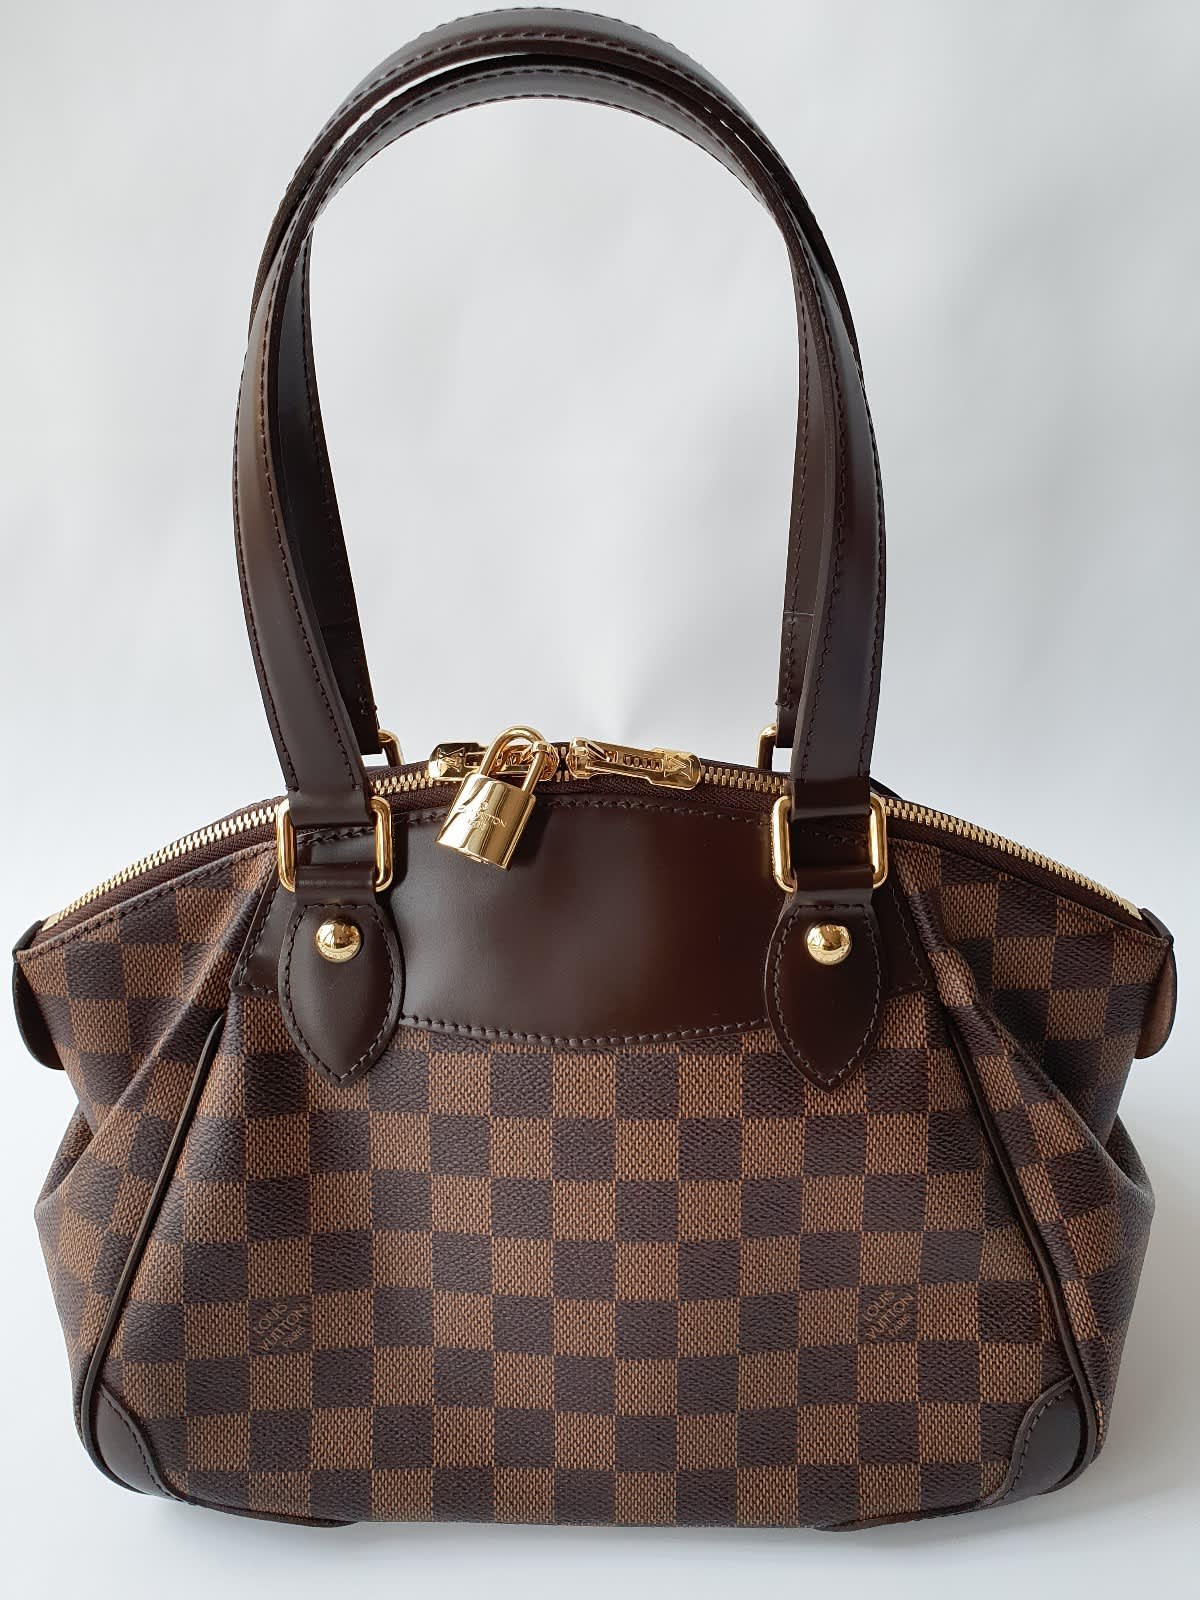 Genuine Louis Vuitton Office Bag, Bags, Gumtree Australia Boorowa Area -  Boorowa